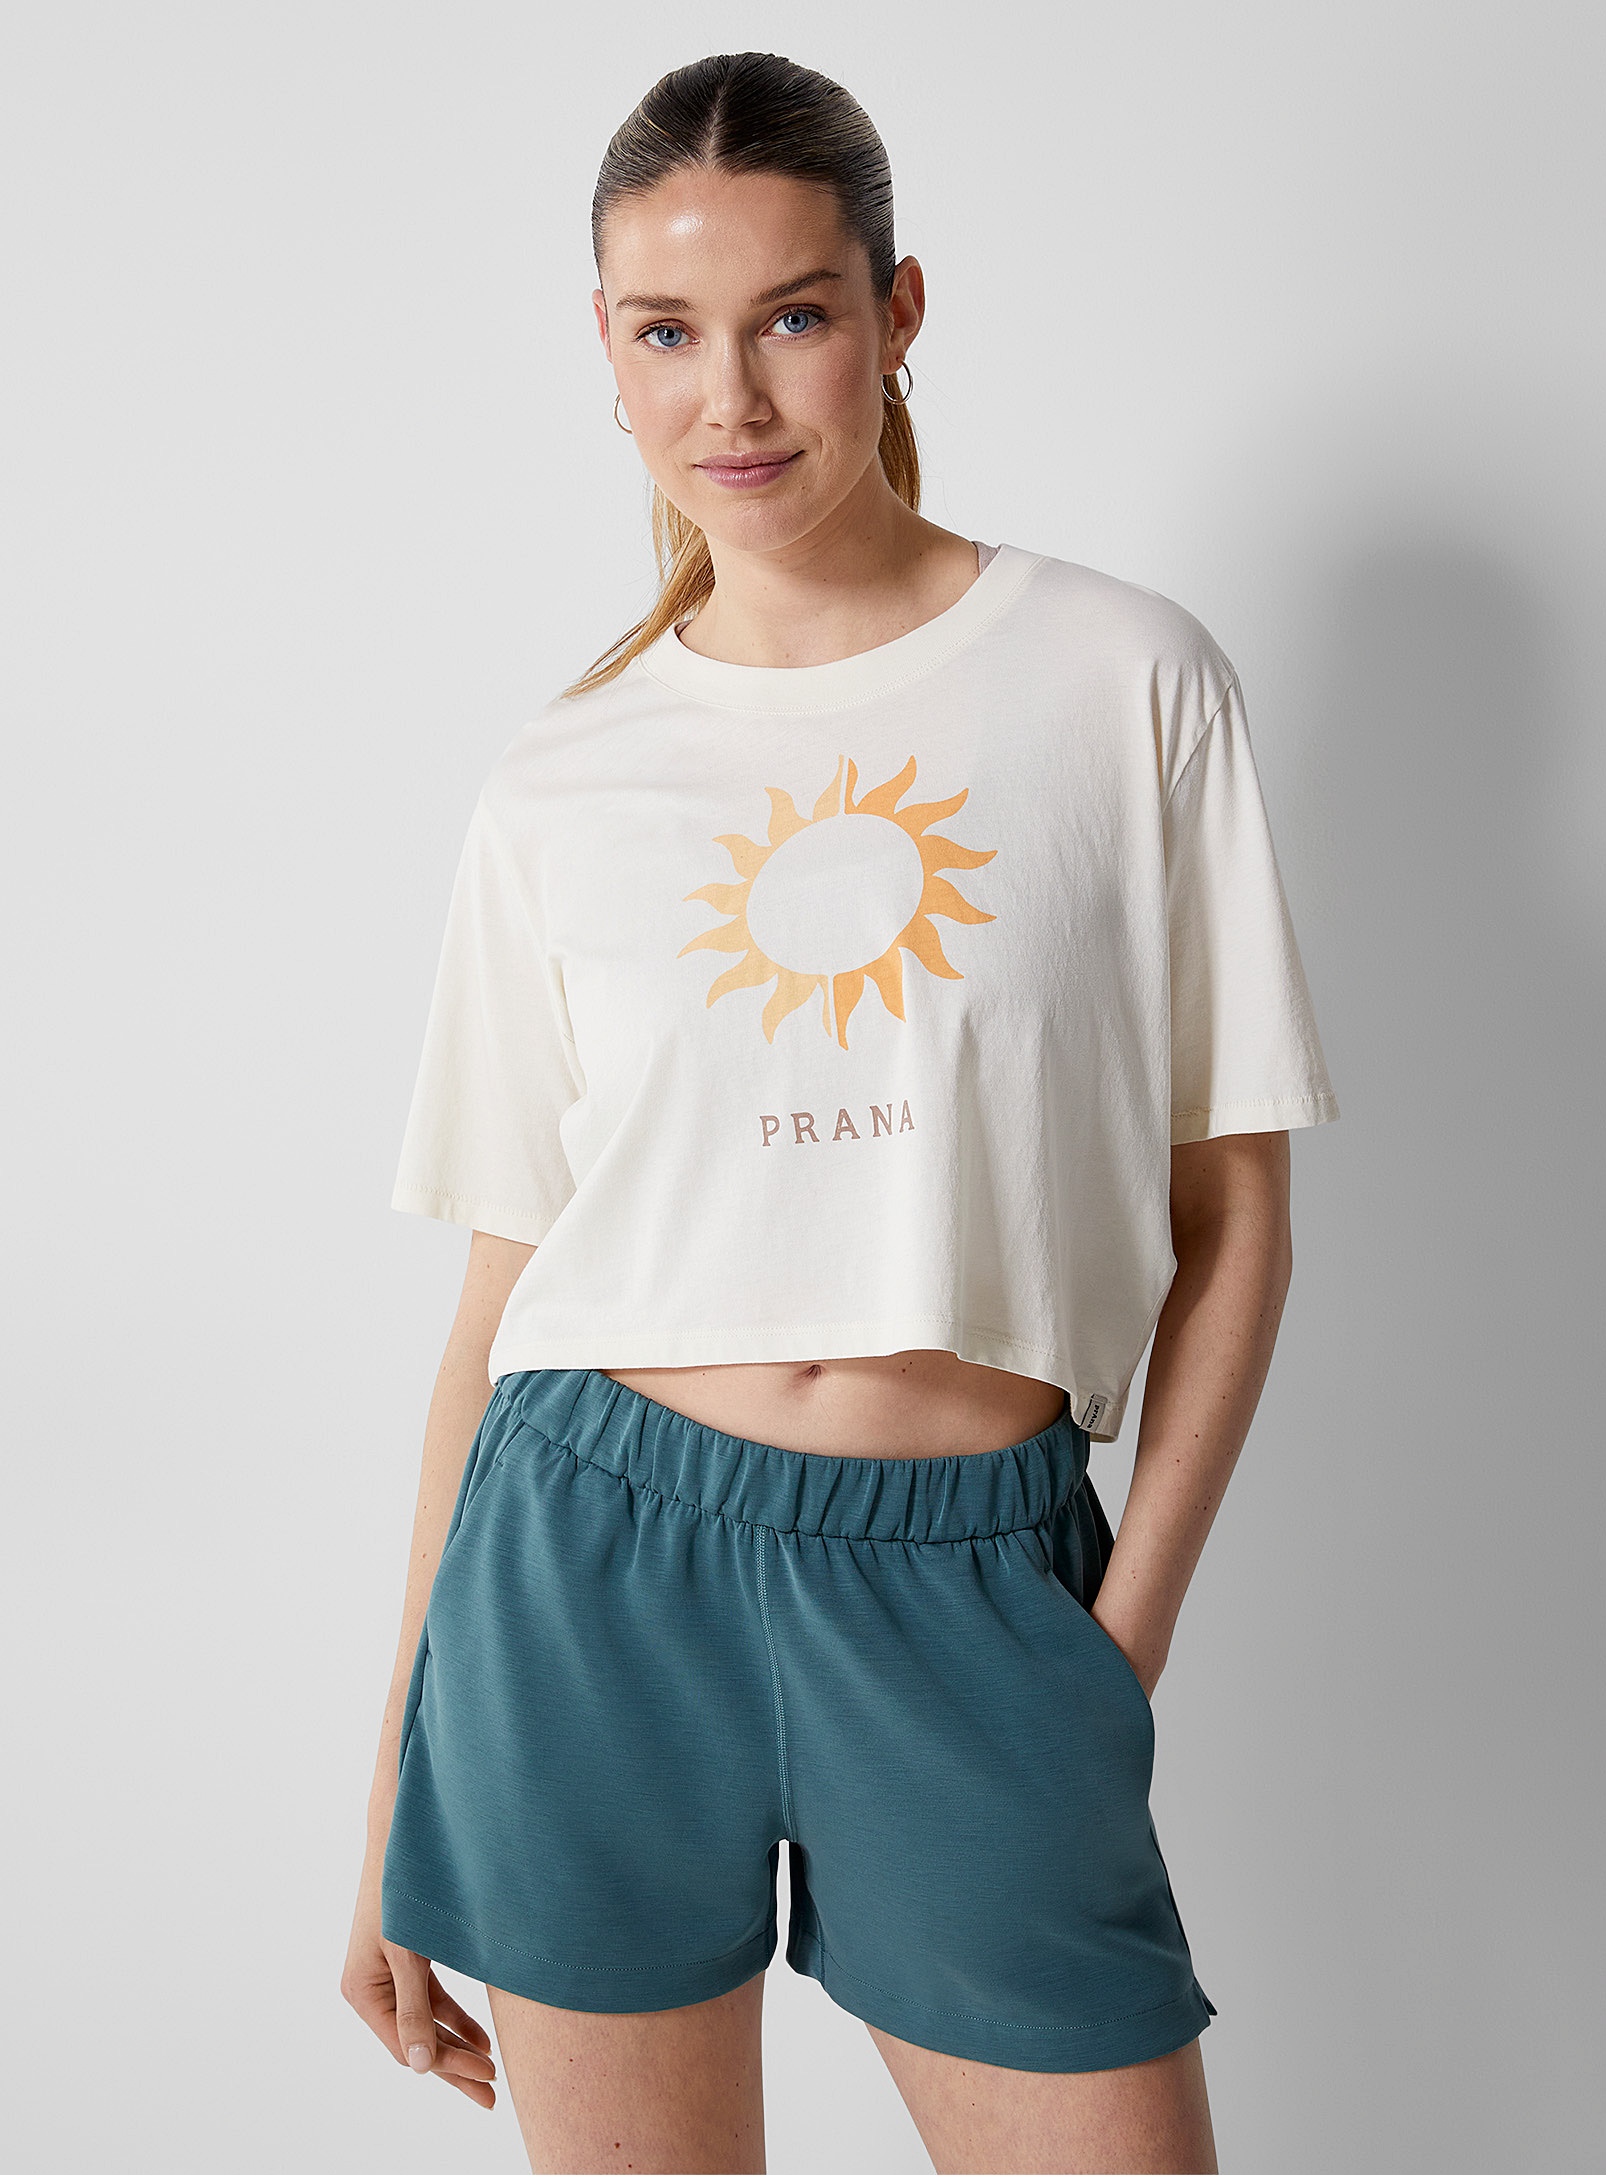 Prana - Le t-shirt carré raccourci soleil